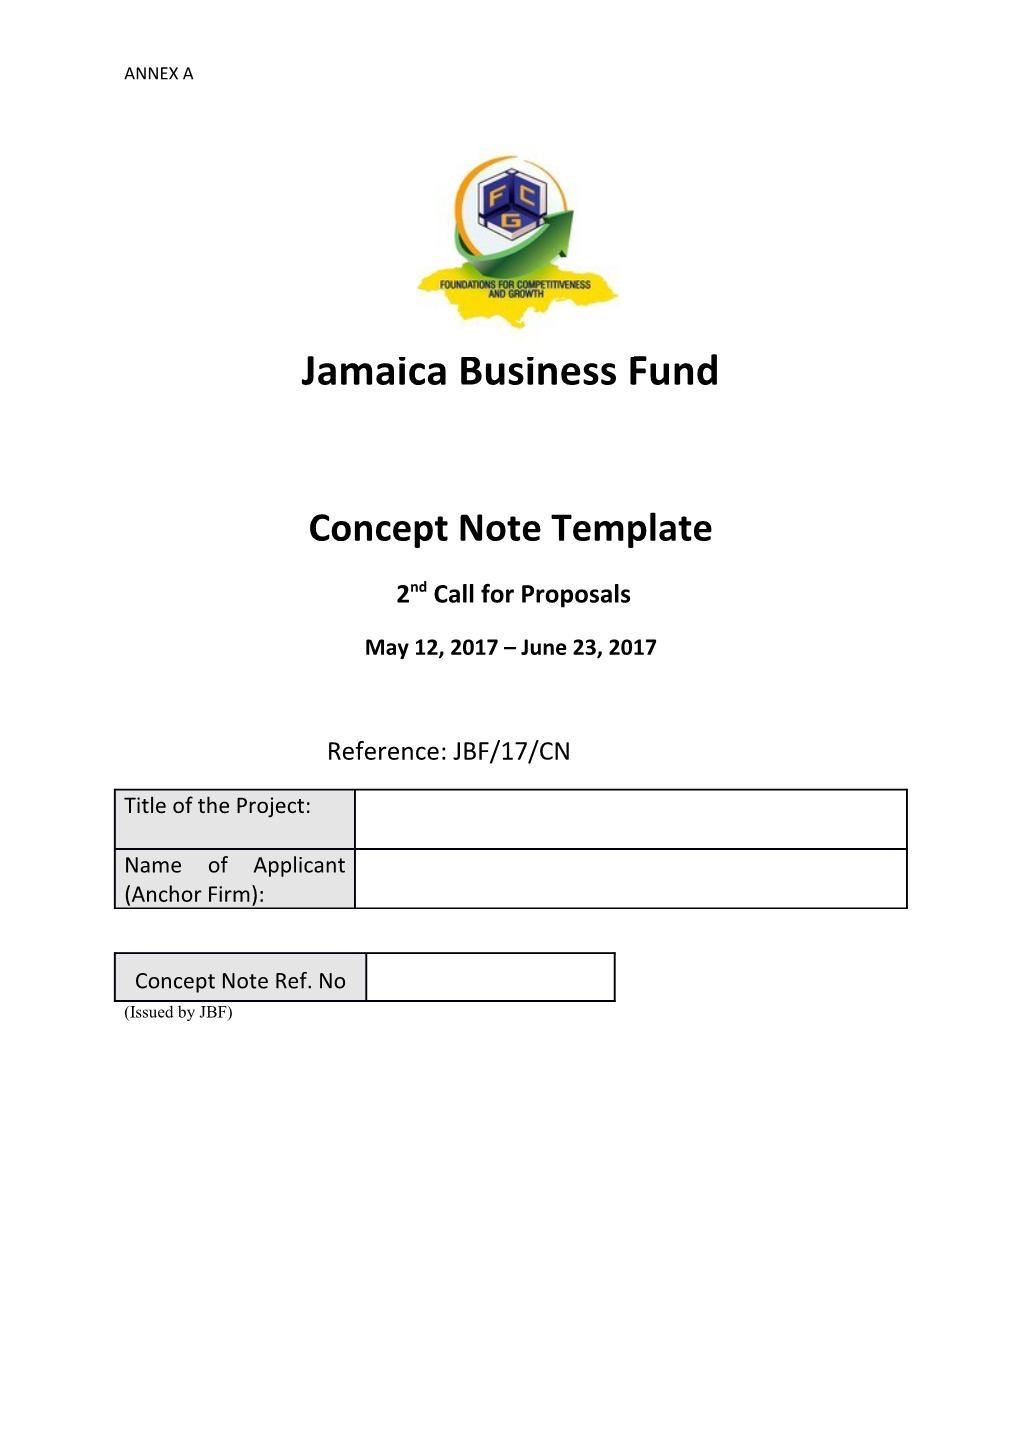 Jamaica Business Fund